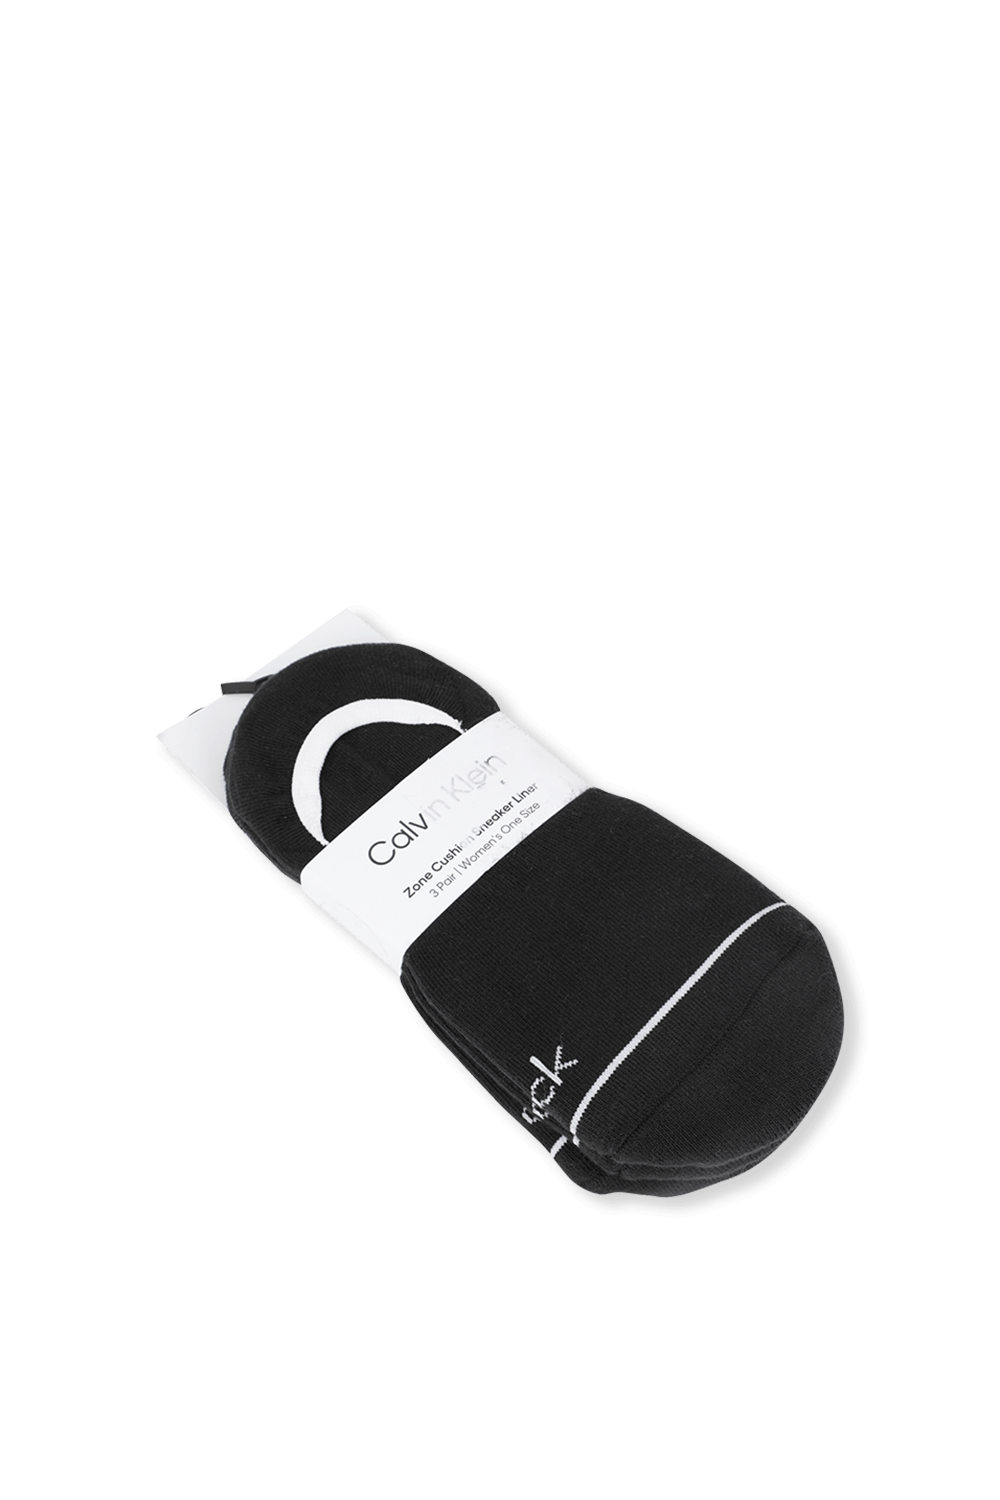 3Pack Sneaker Liner Socks in Black CALVIN KLEIN